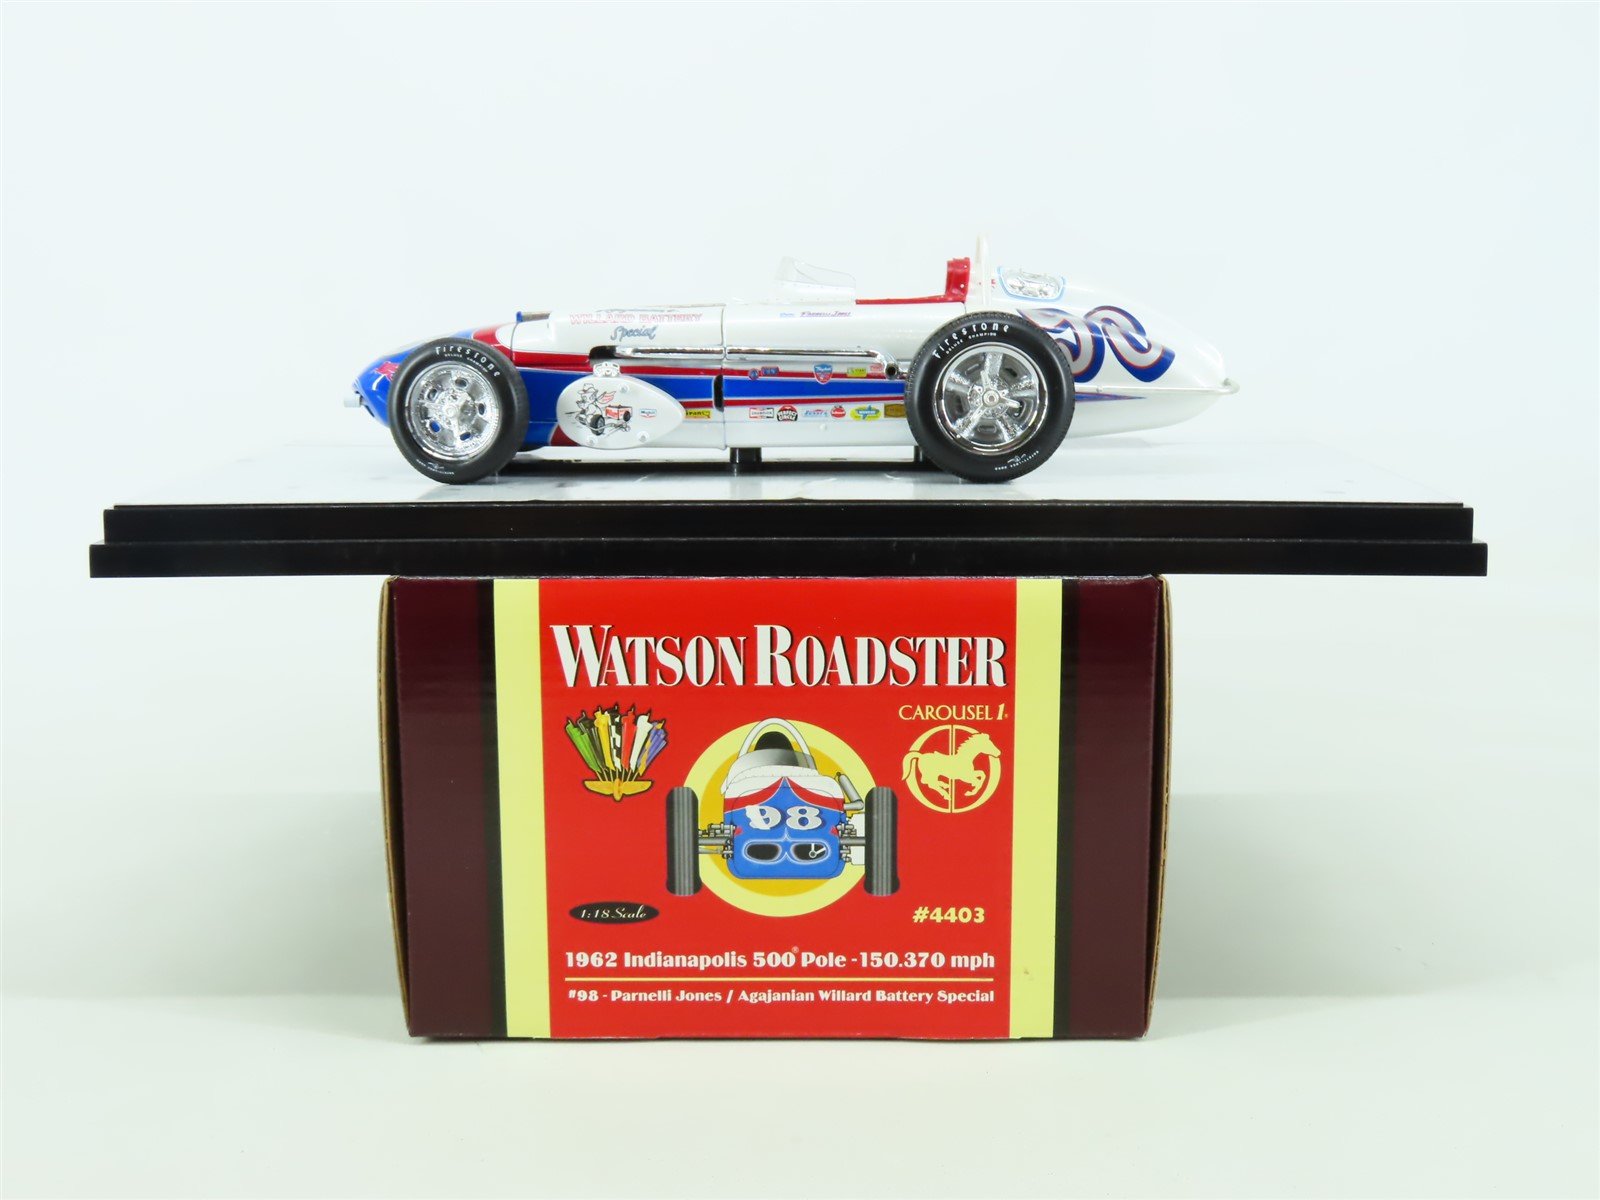 1:18 Scale Carousel 1 #4403 1962 Indianapolis 500 Pole Watson Roadster #98